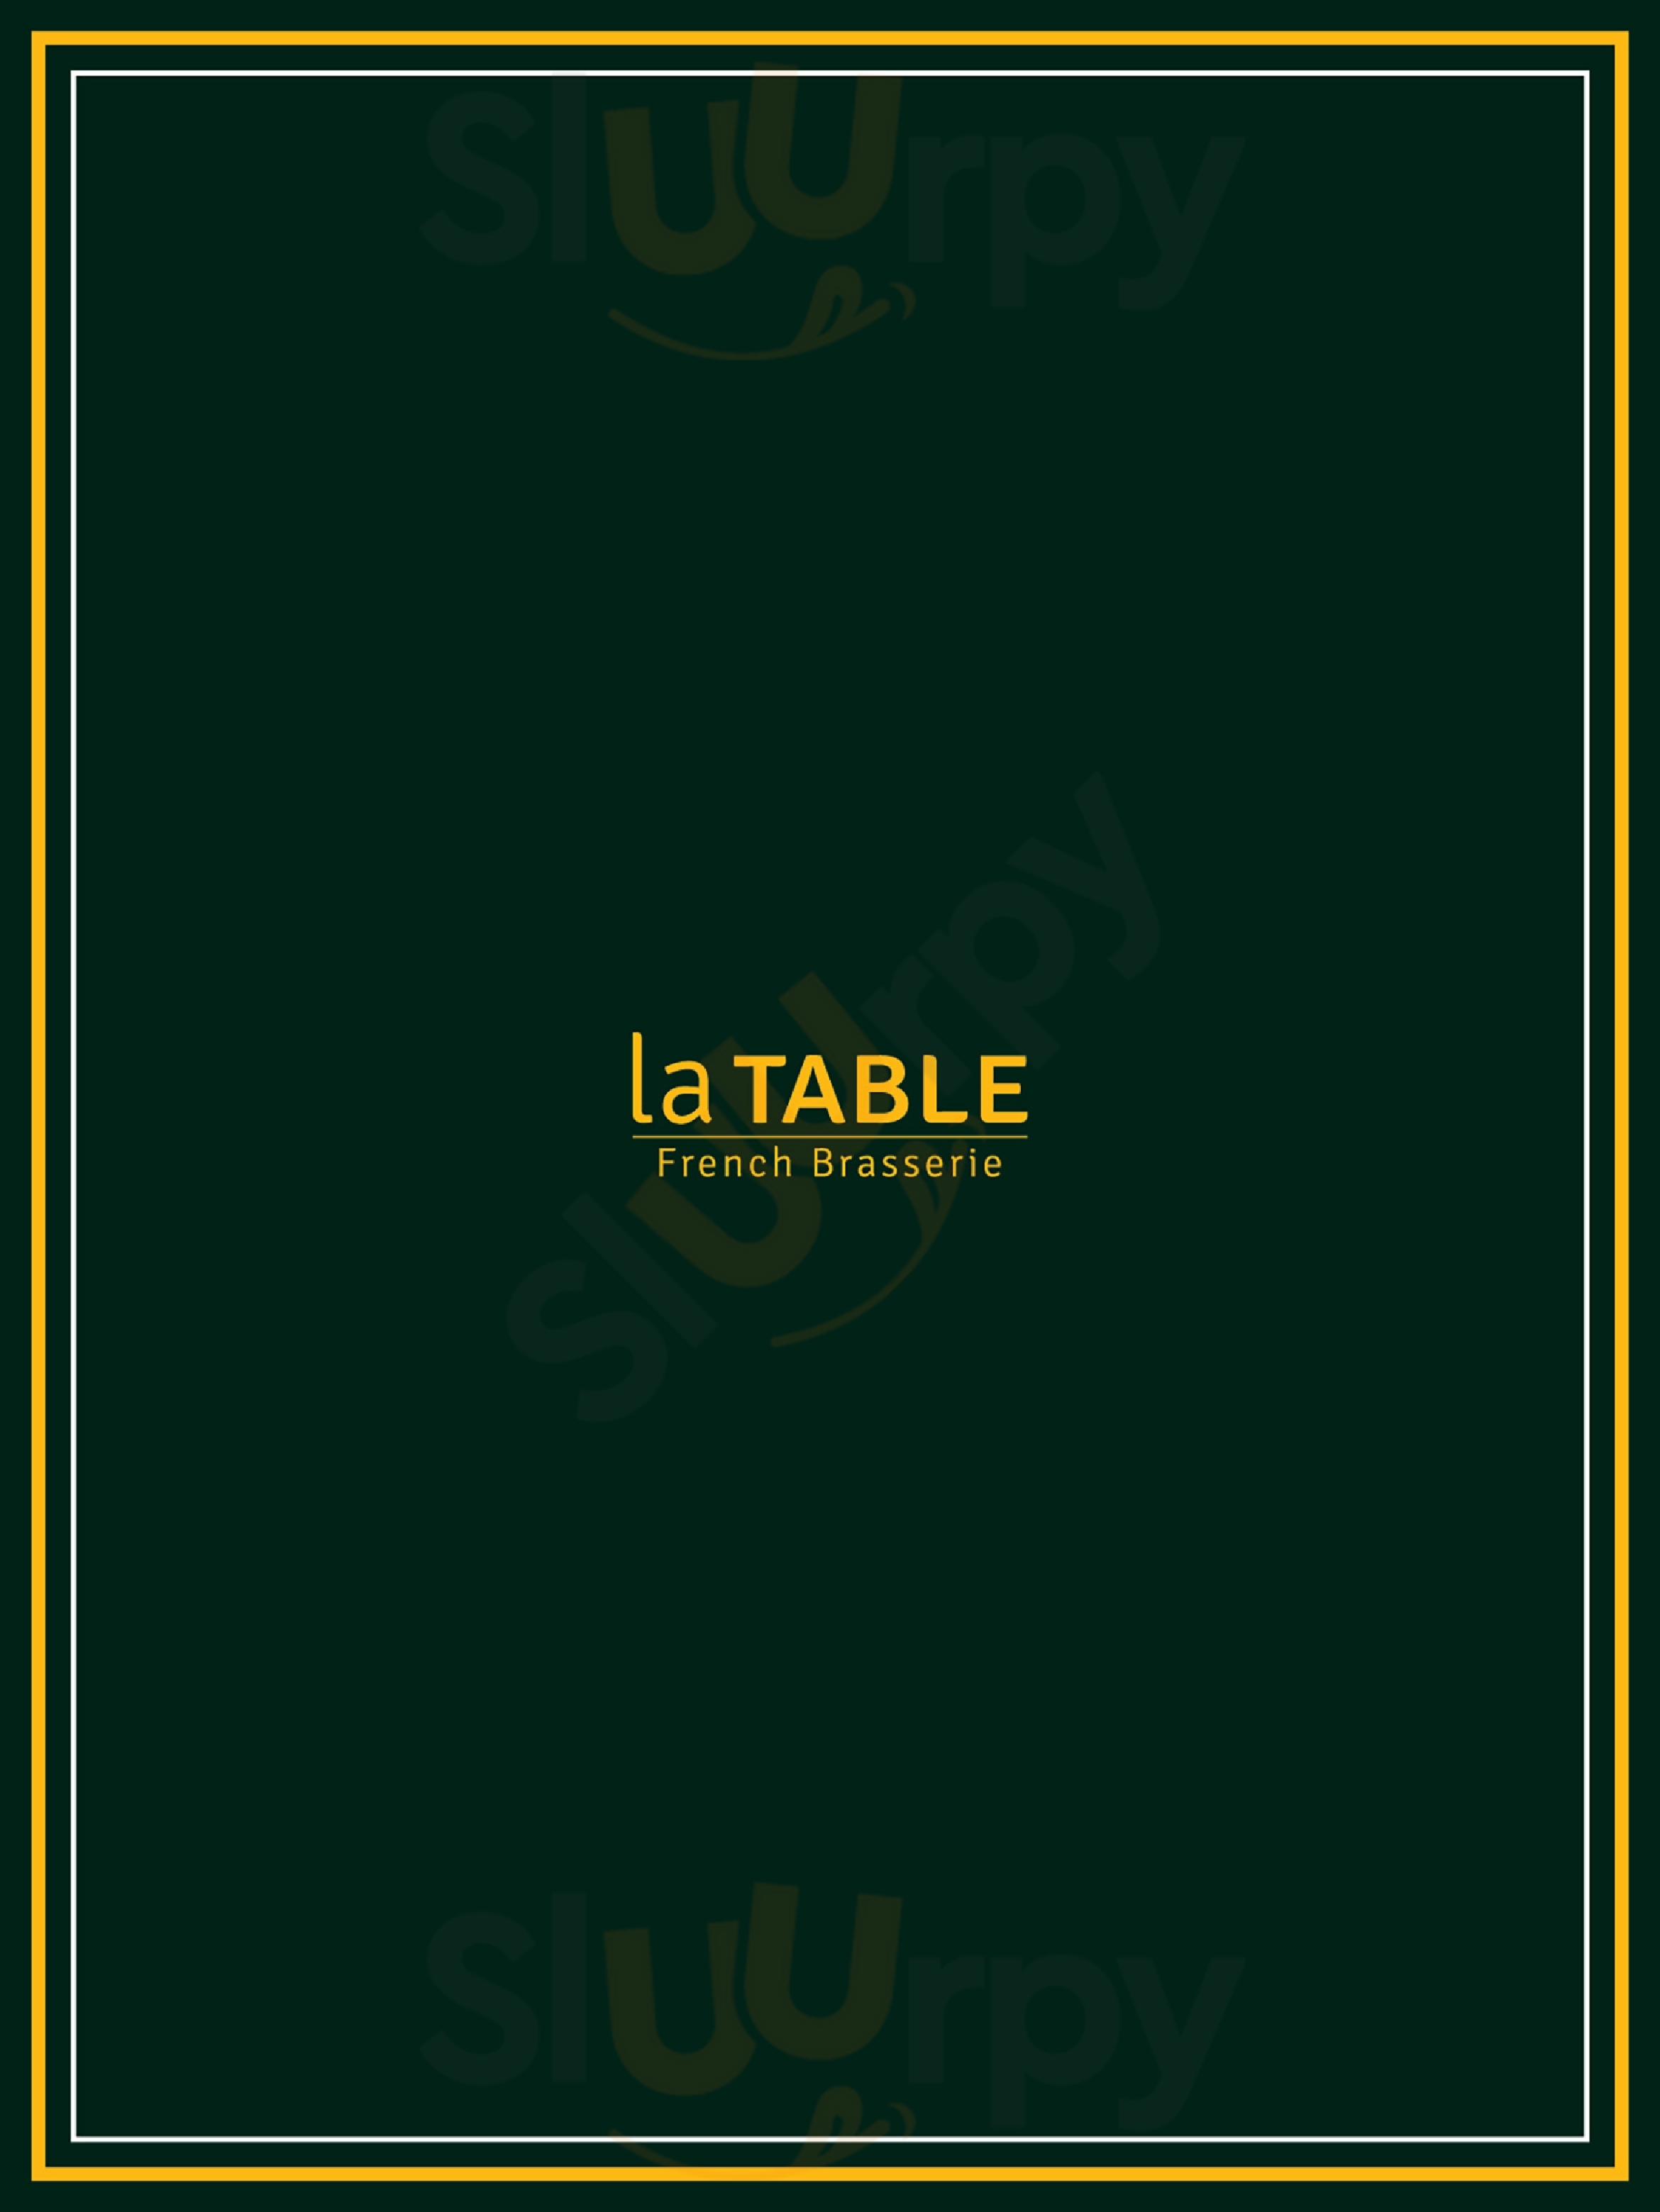 La Table - 千禧新世界香港酒店 香港 Menu - 1